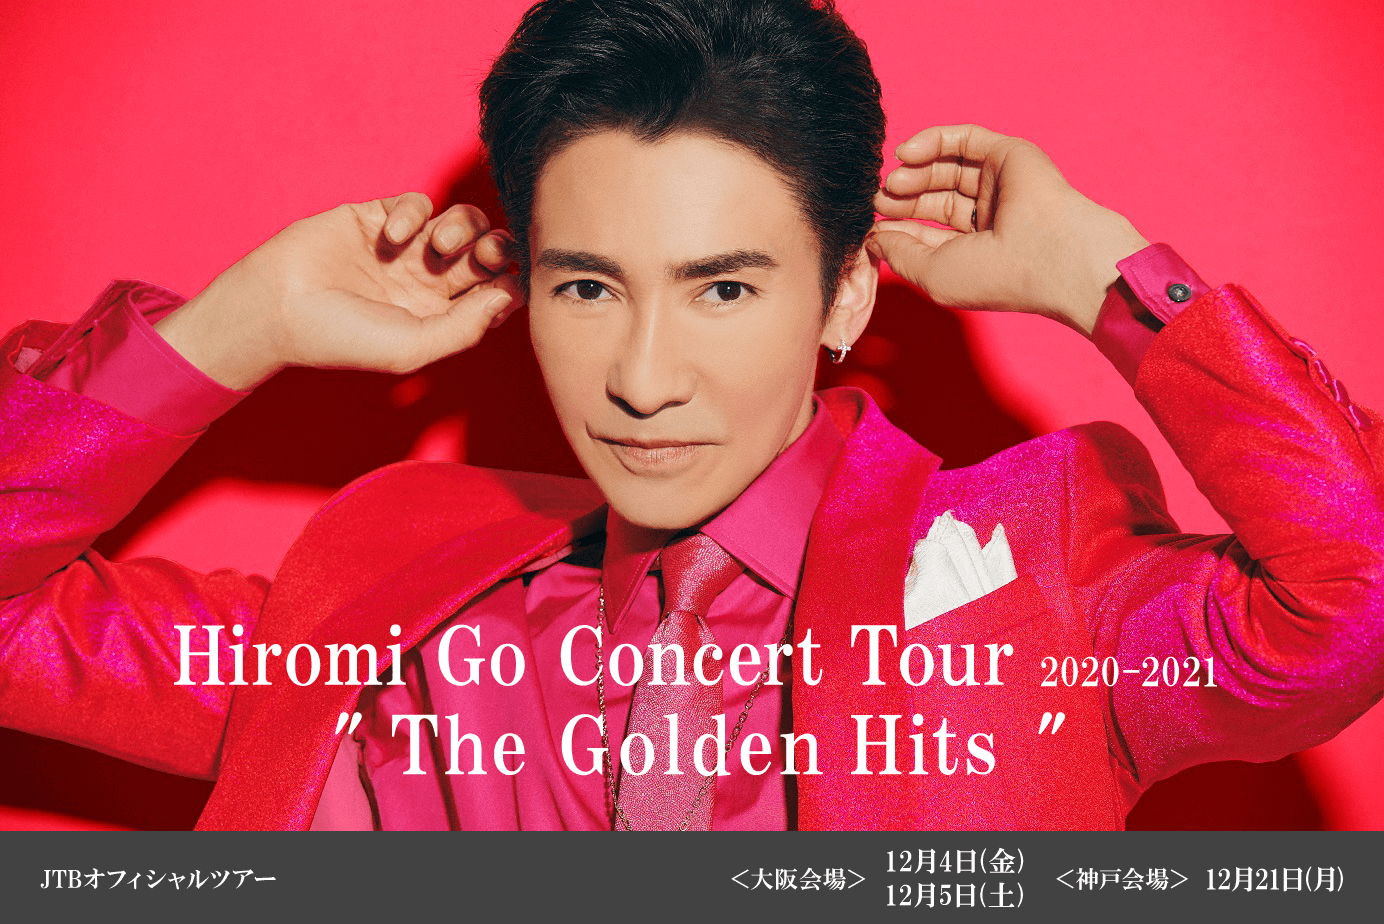 Hiromi Go Concert Tour 2020-2021 "The Golden Hits" JTBオフィシャルツアー